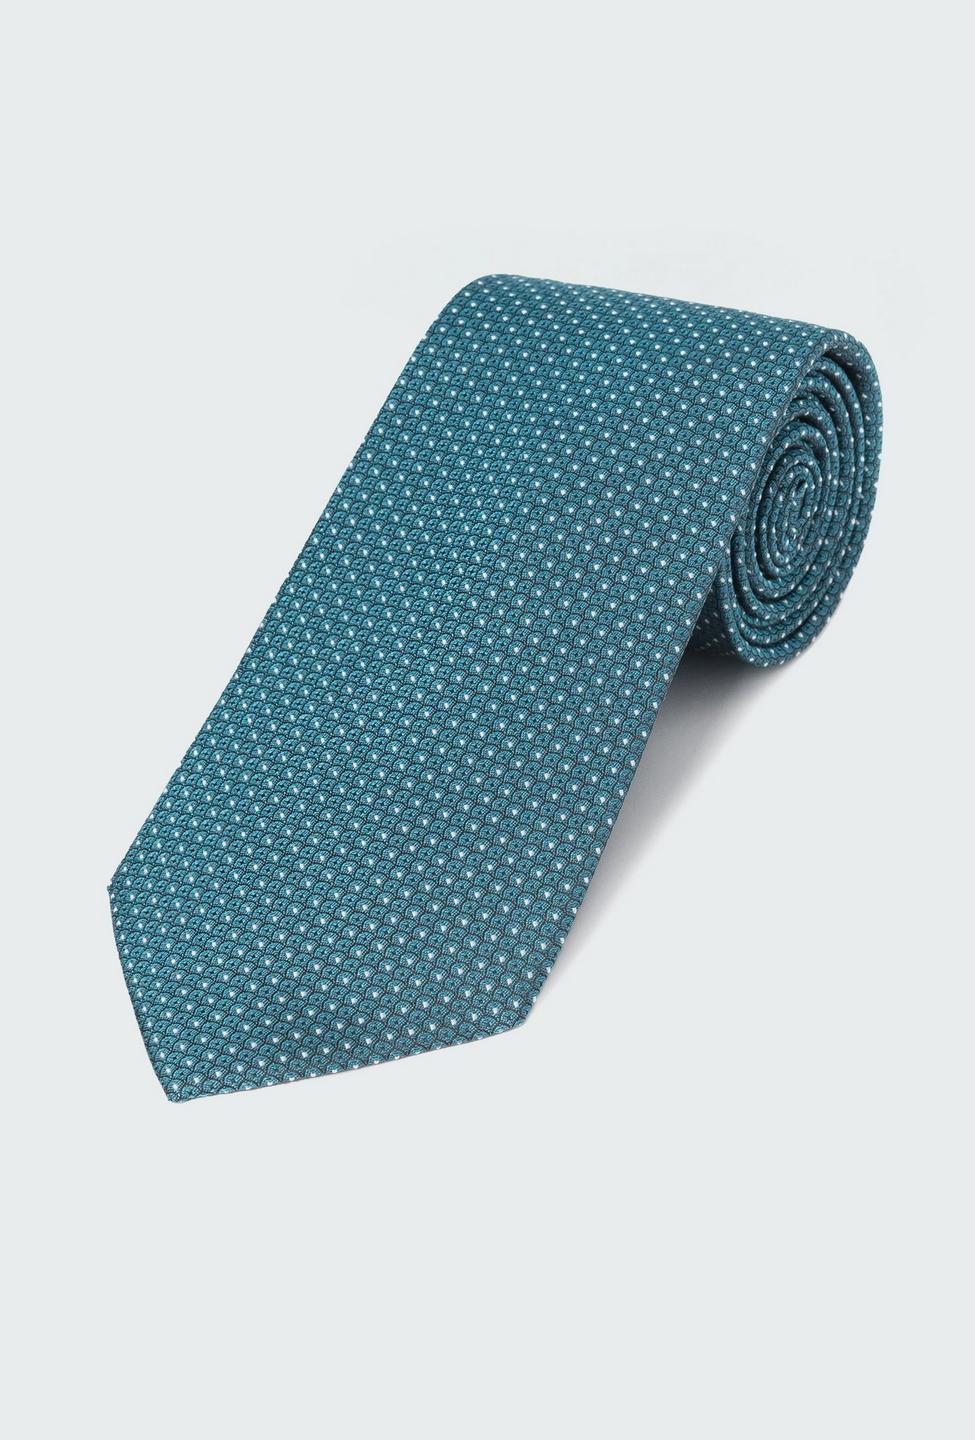 Blue tie - Pattern Design from Premium Indochino Collection